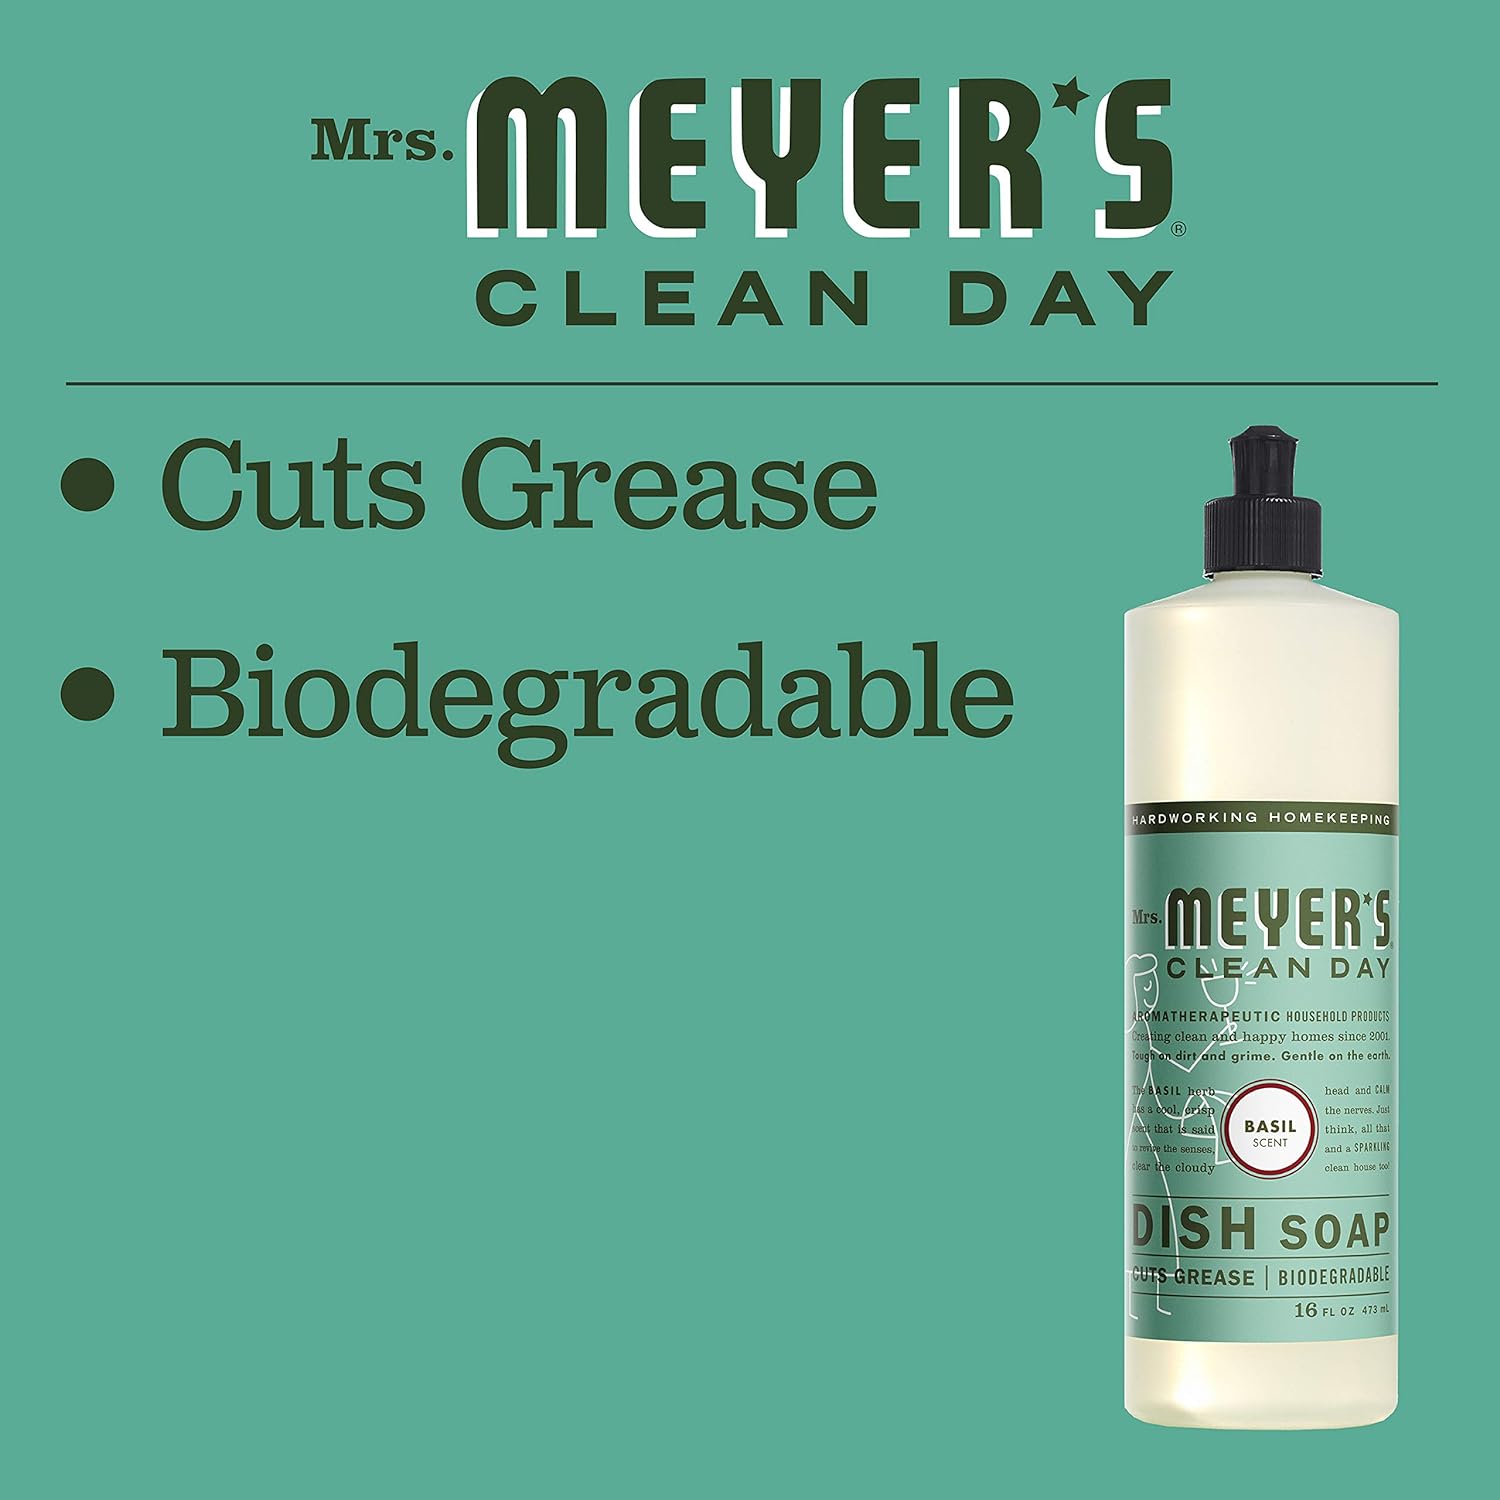 MRS. MEYER'S CLEAN DAY Liquid Dish Soap, Biodegradable Formula, Basil, 16 fl. oz - Pack of 3 : Health & Household